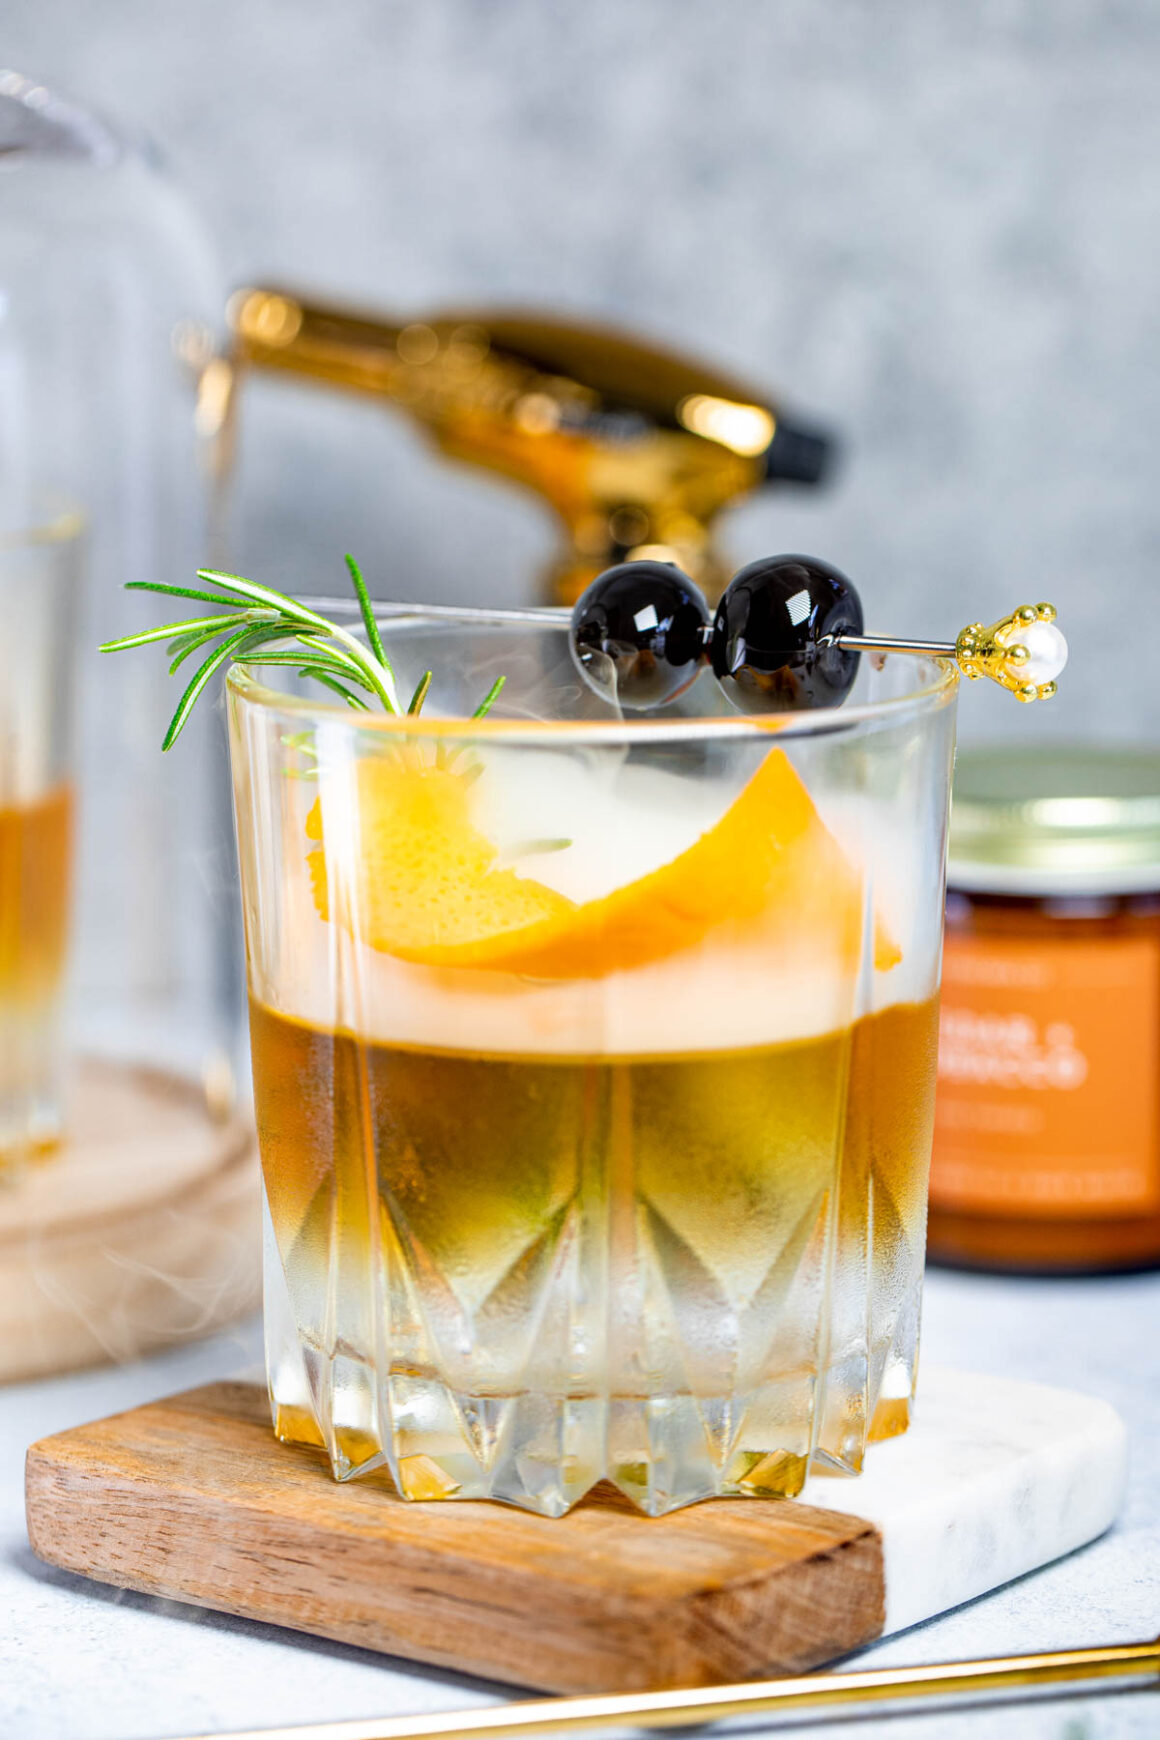 smoked whiskey serve into a short glass with smoke and marashinos cherries, rosemary sprig and orange twist for garnish